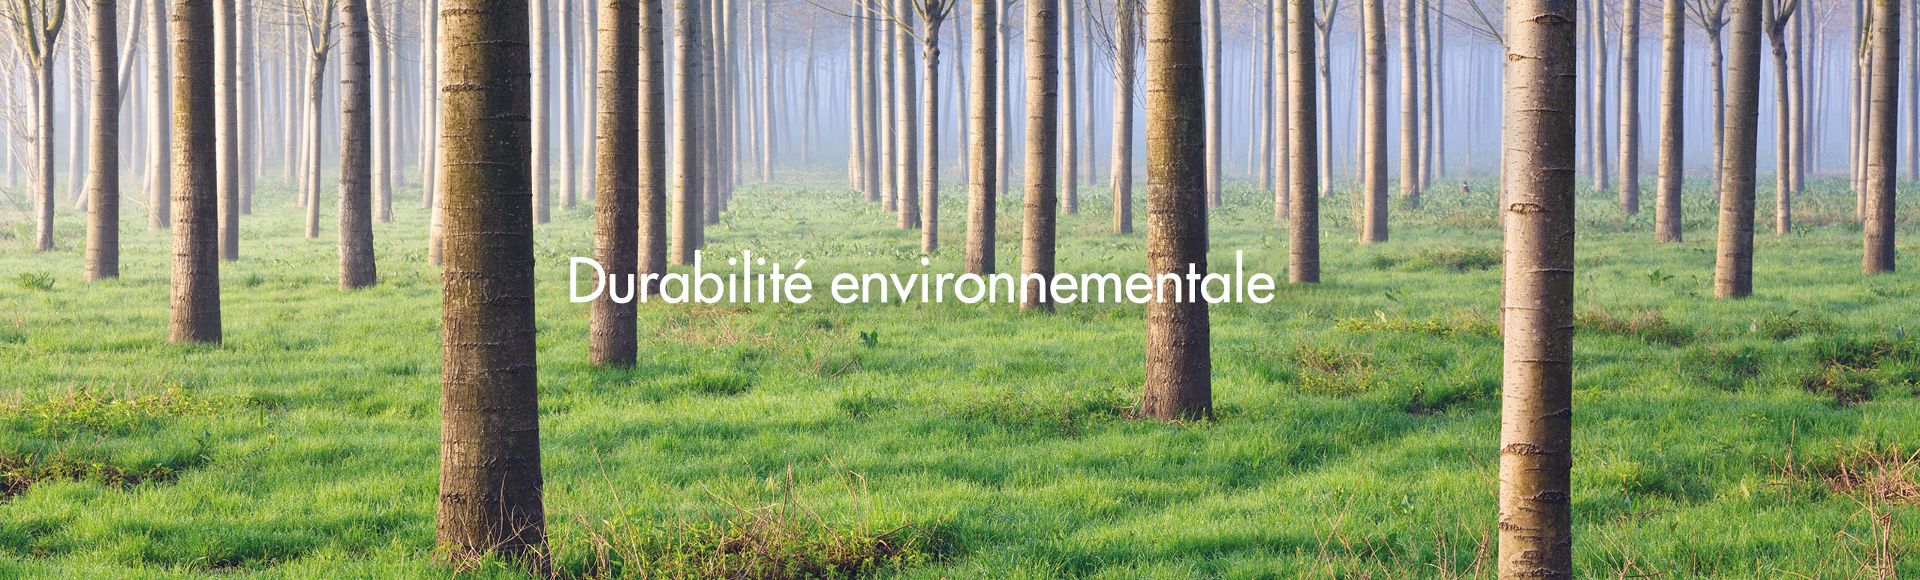 Durabilité environnementale - Smeg